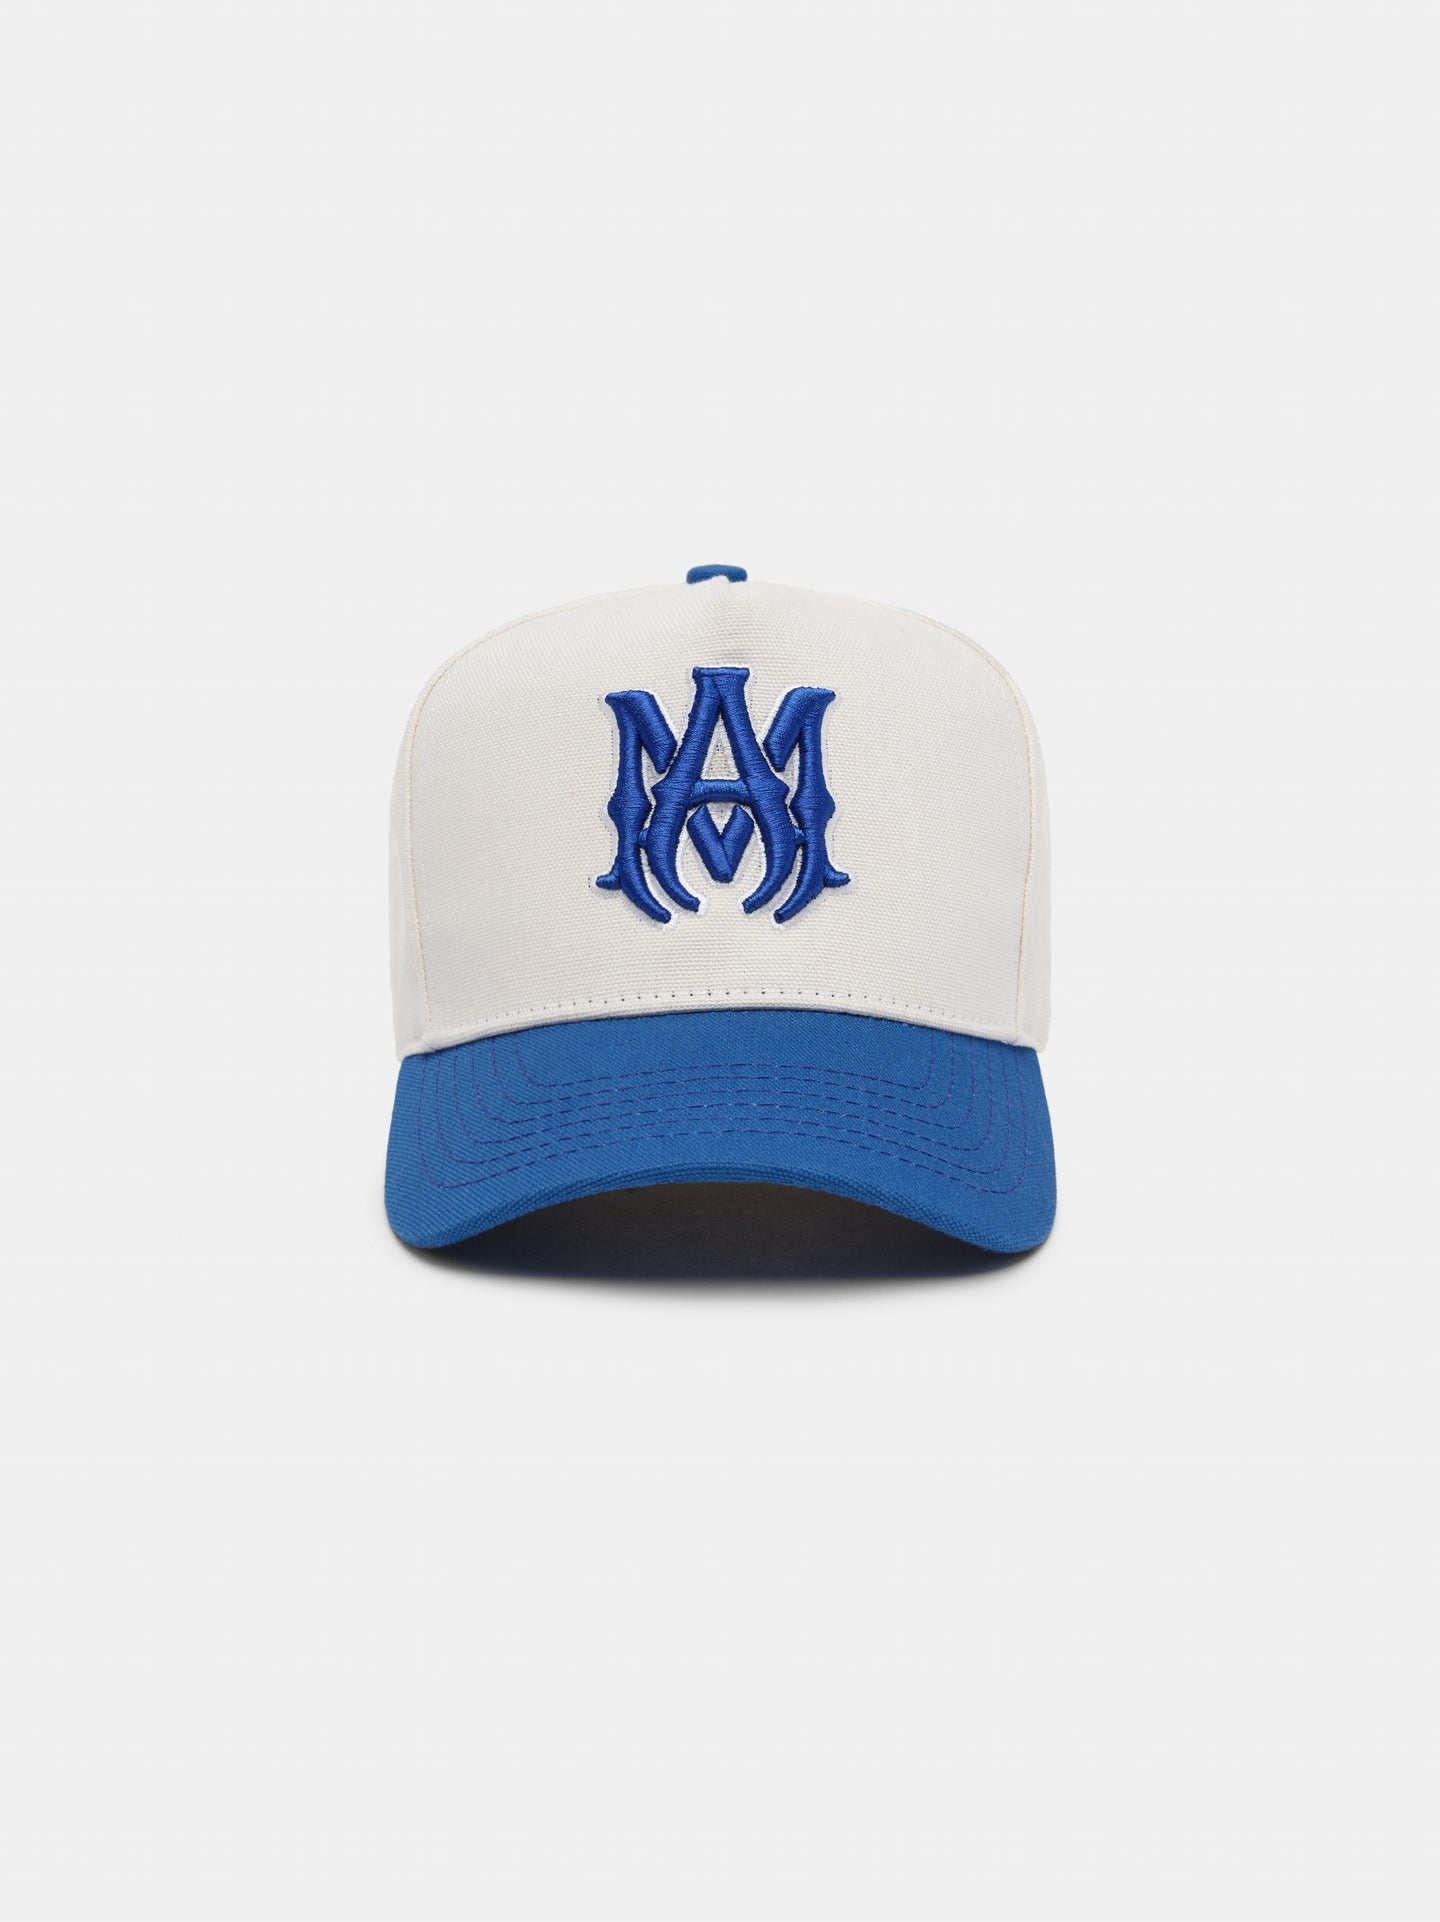 MA CANVAS HAT - Alabaster Blue